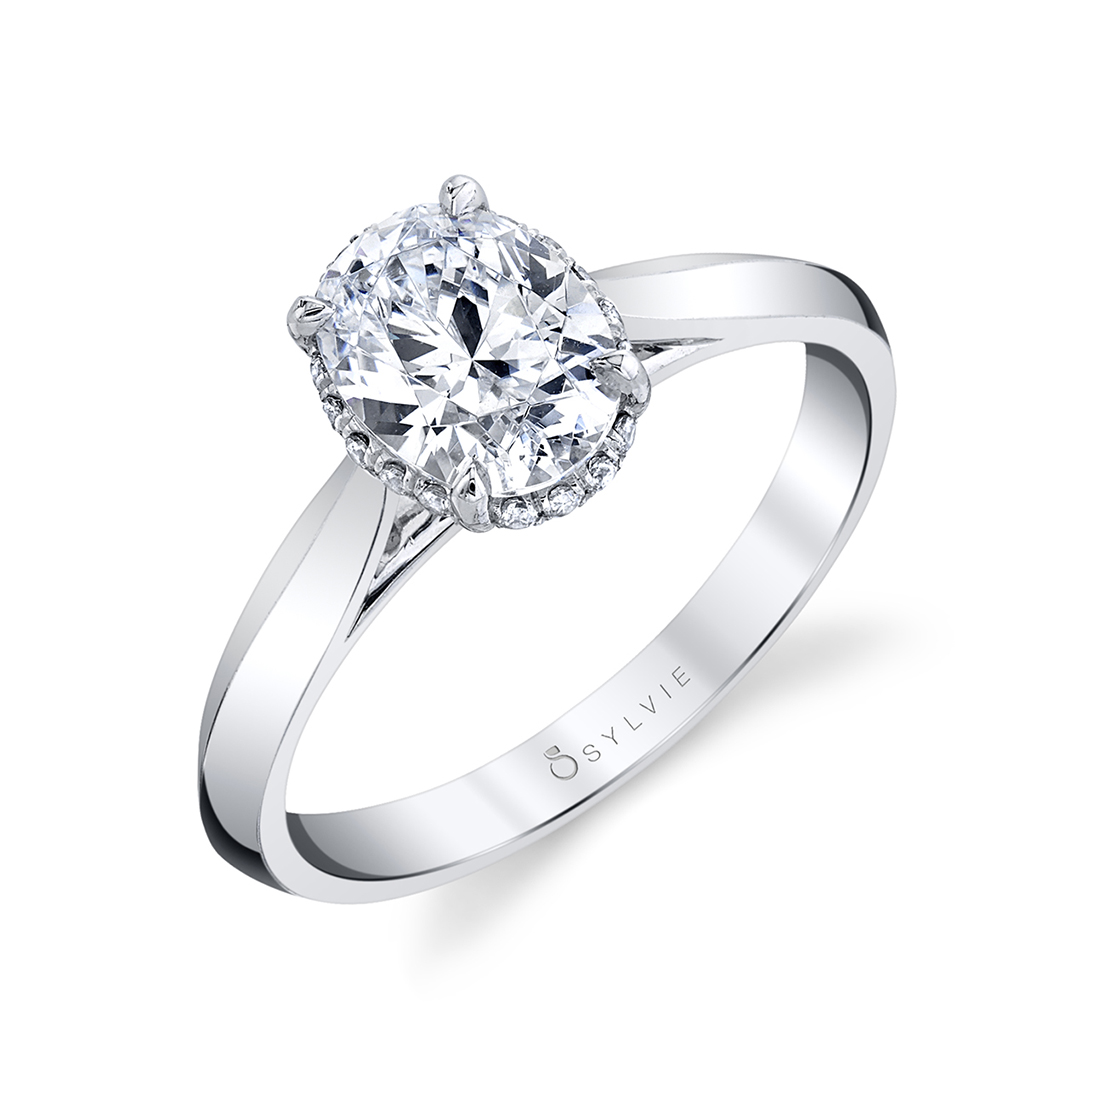 Unique Hidden Halo Engagement Ring - Fae Stuart Benjamin & Co. Jewelry Designs San Diego, CA